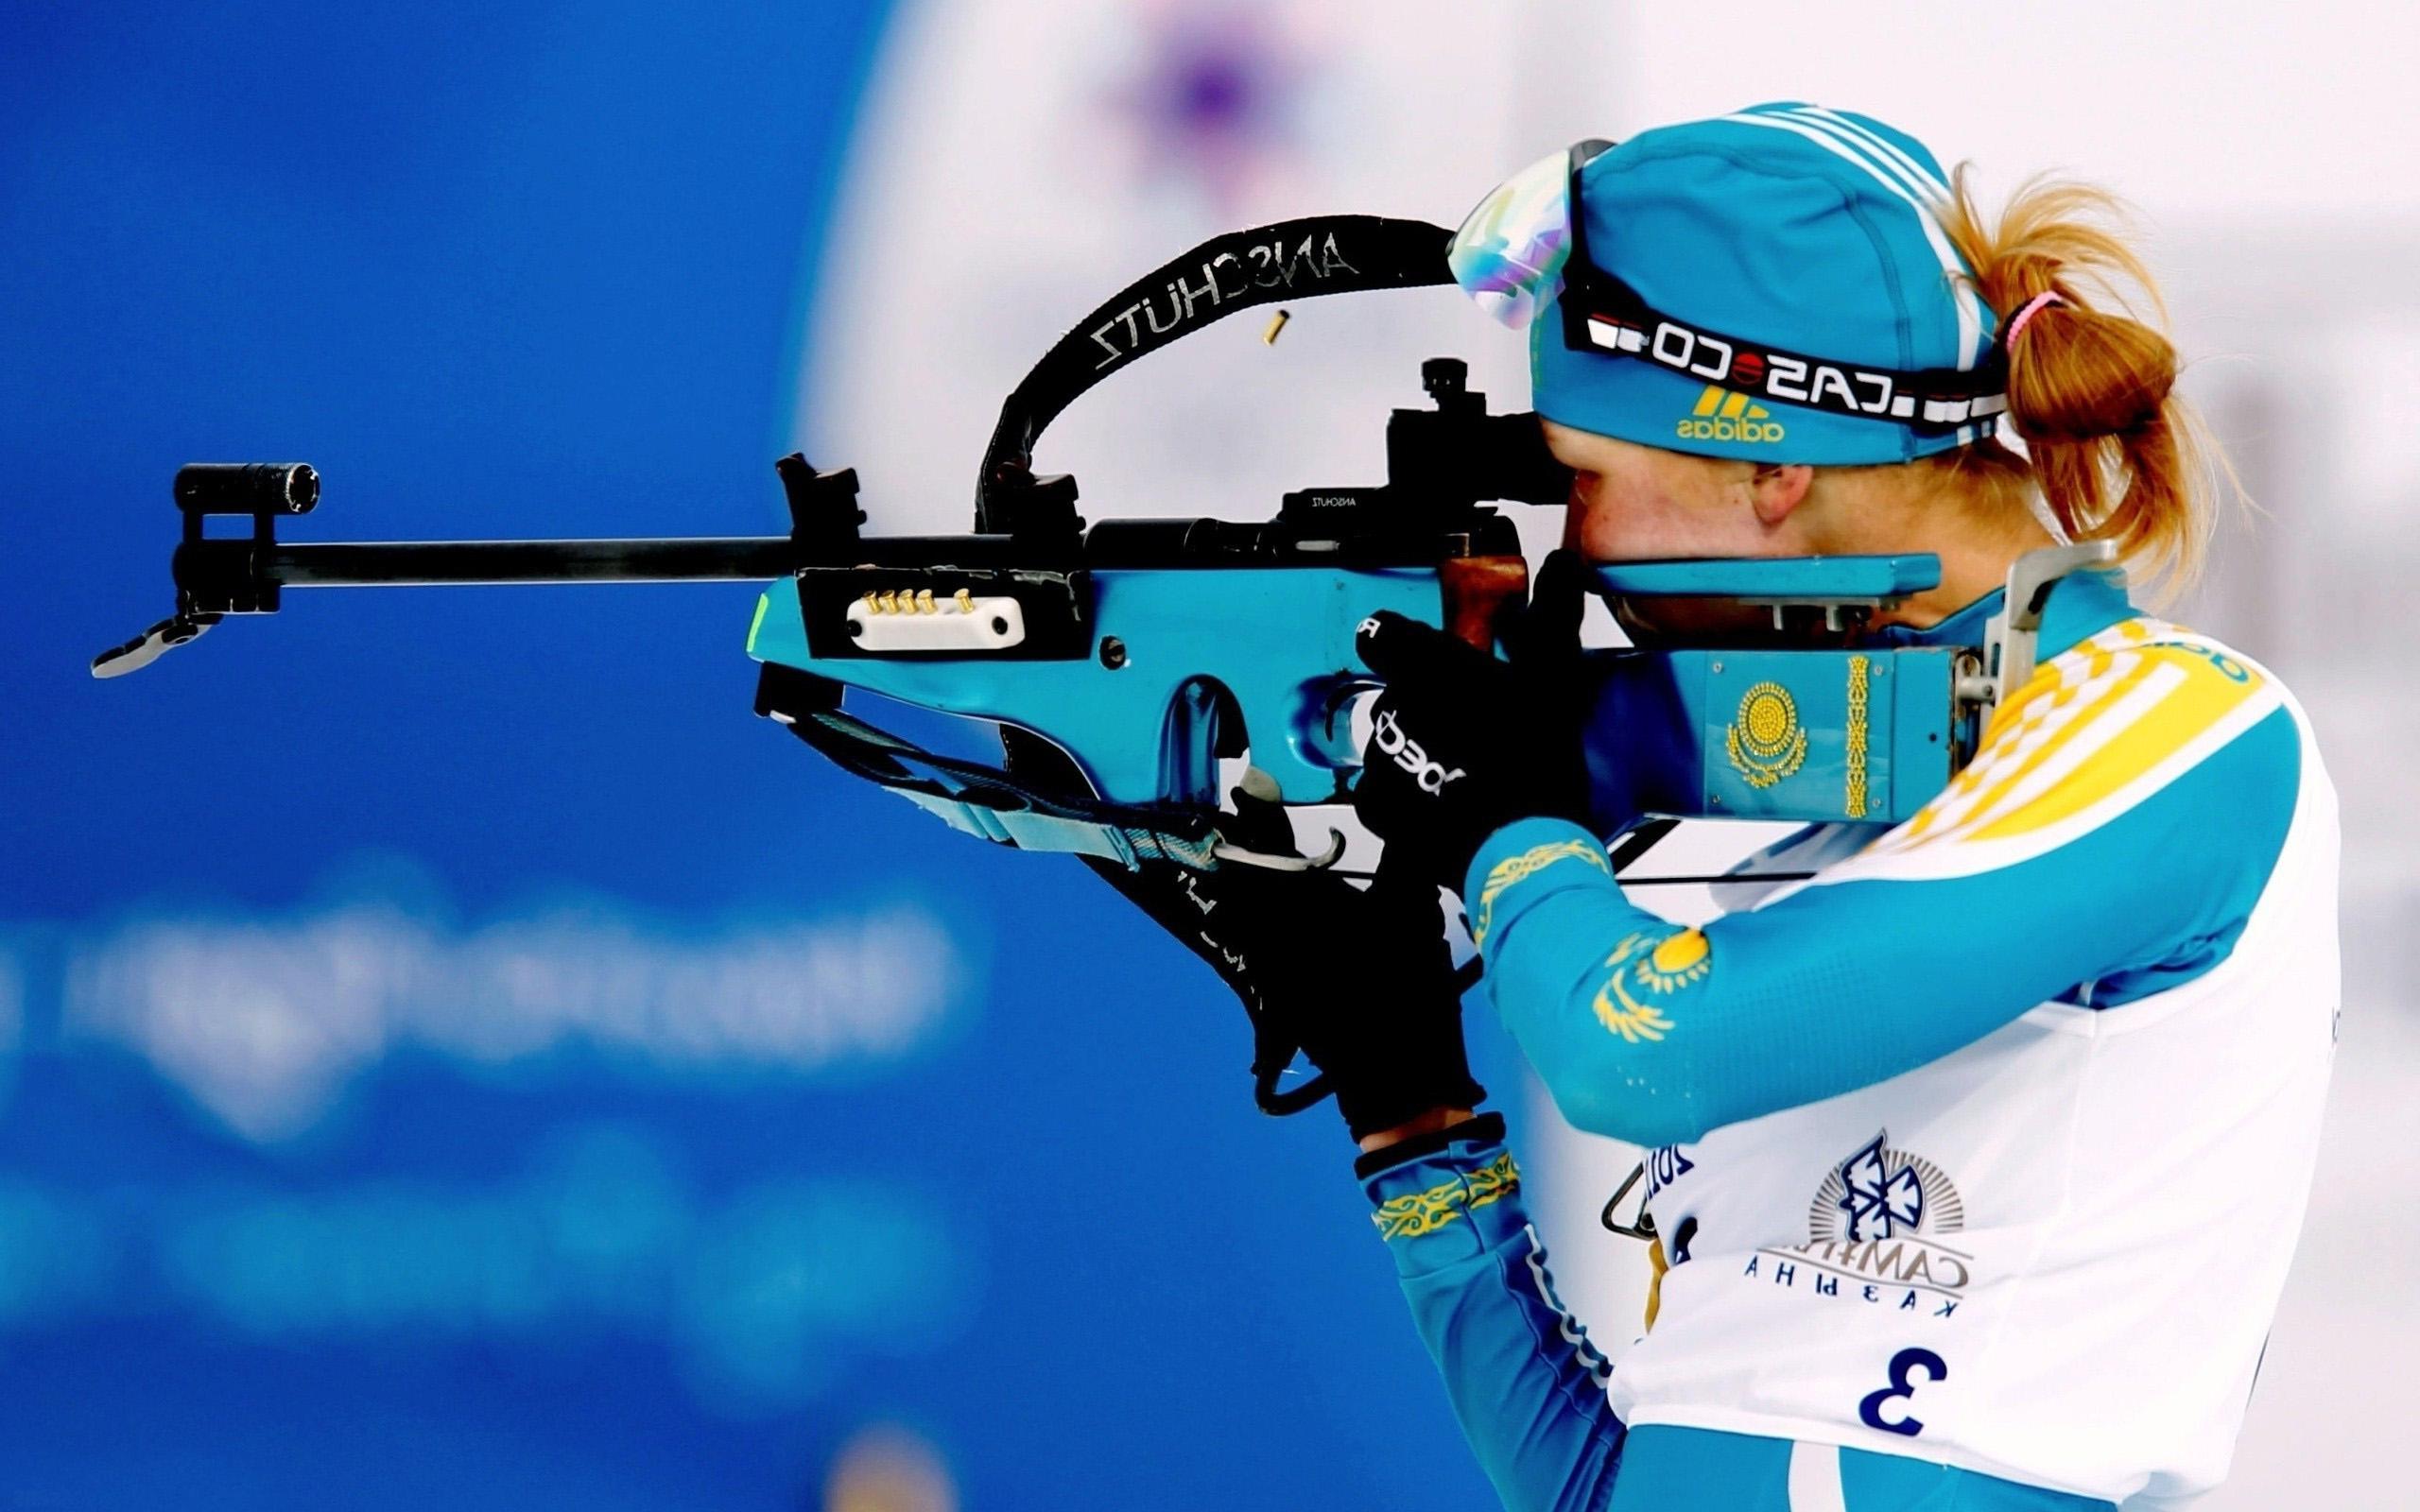 Biathlon khrustaleva player high definition wallpaper. High